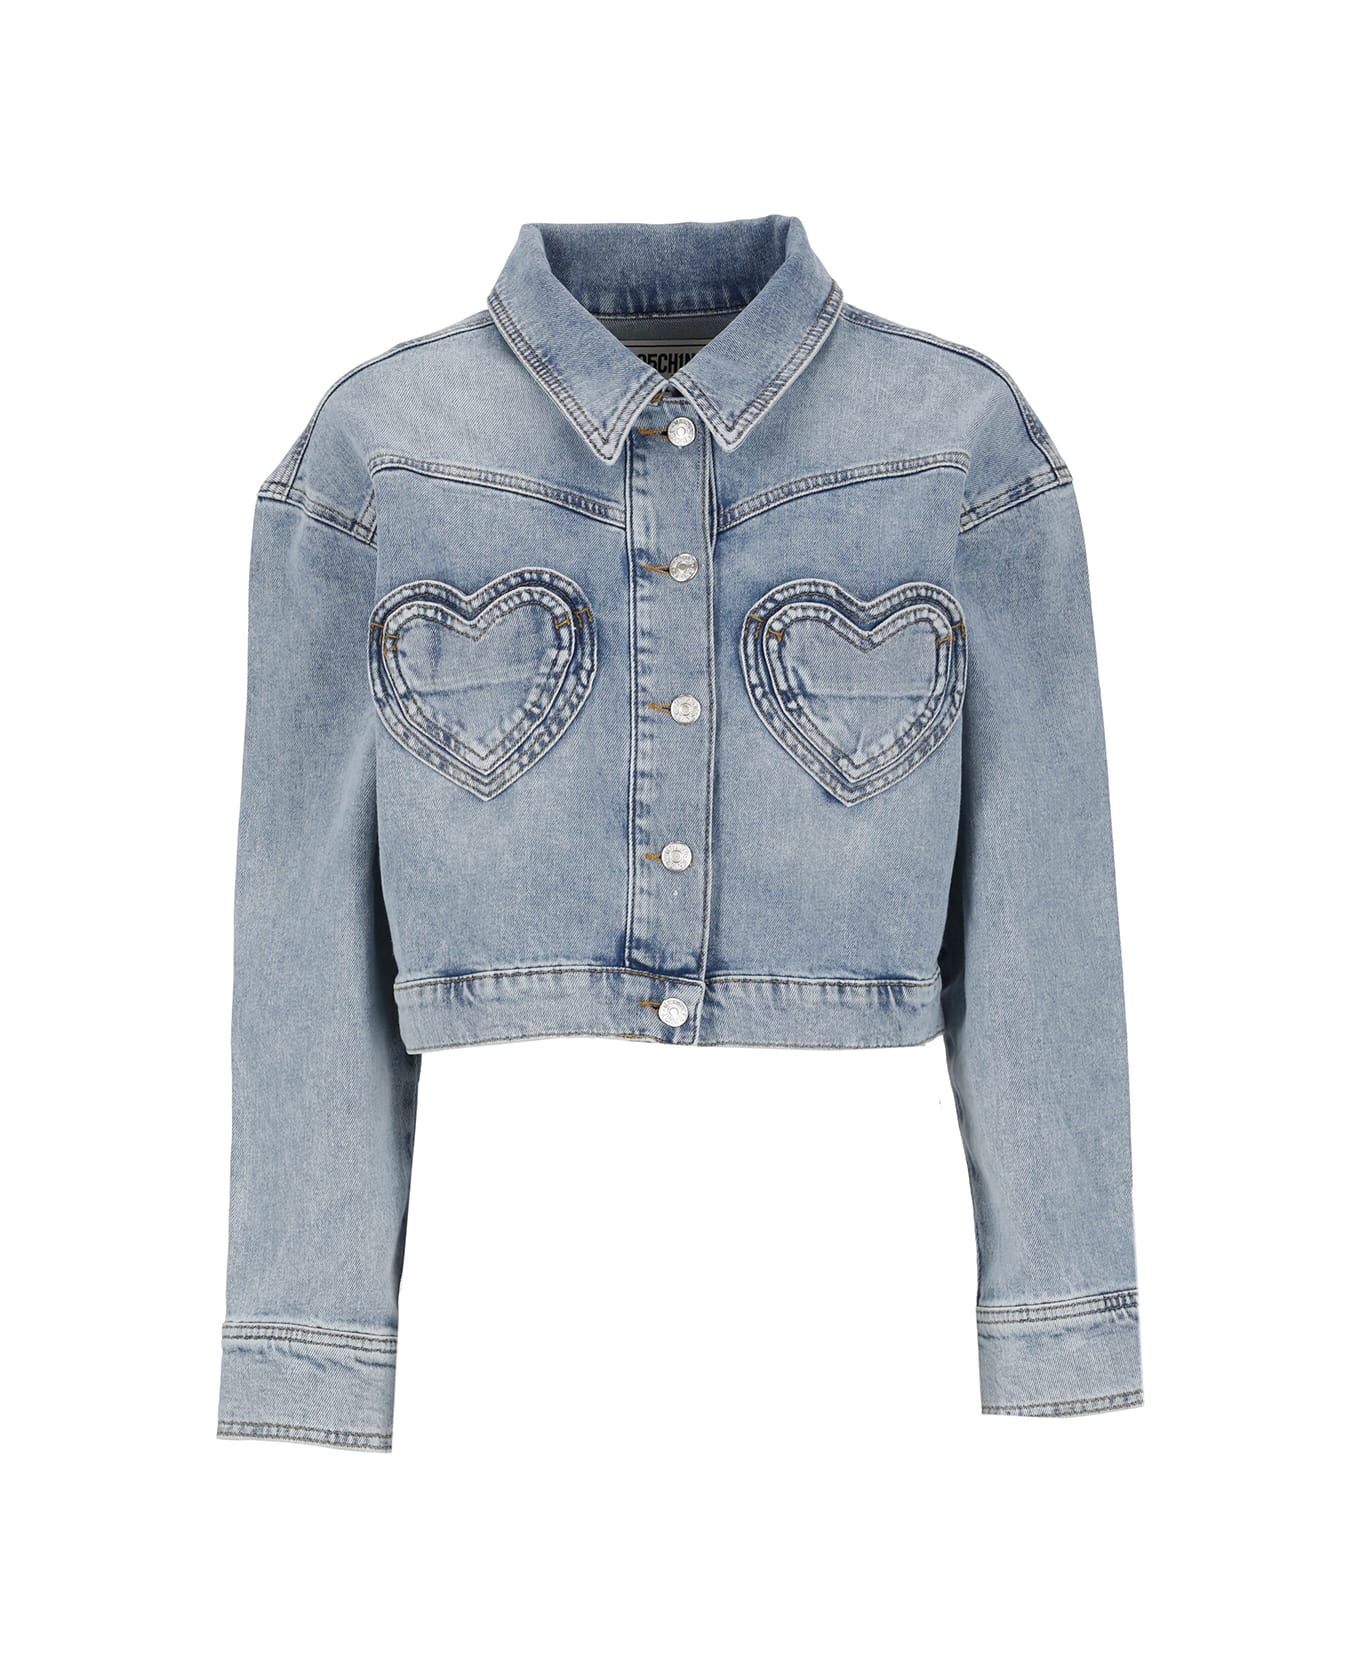 M05CH1N0 Jeans Heart Pockets Denim Jacket - Light Blue ブレザー